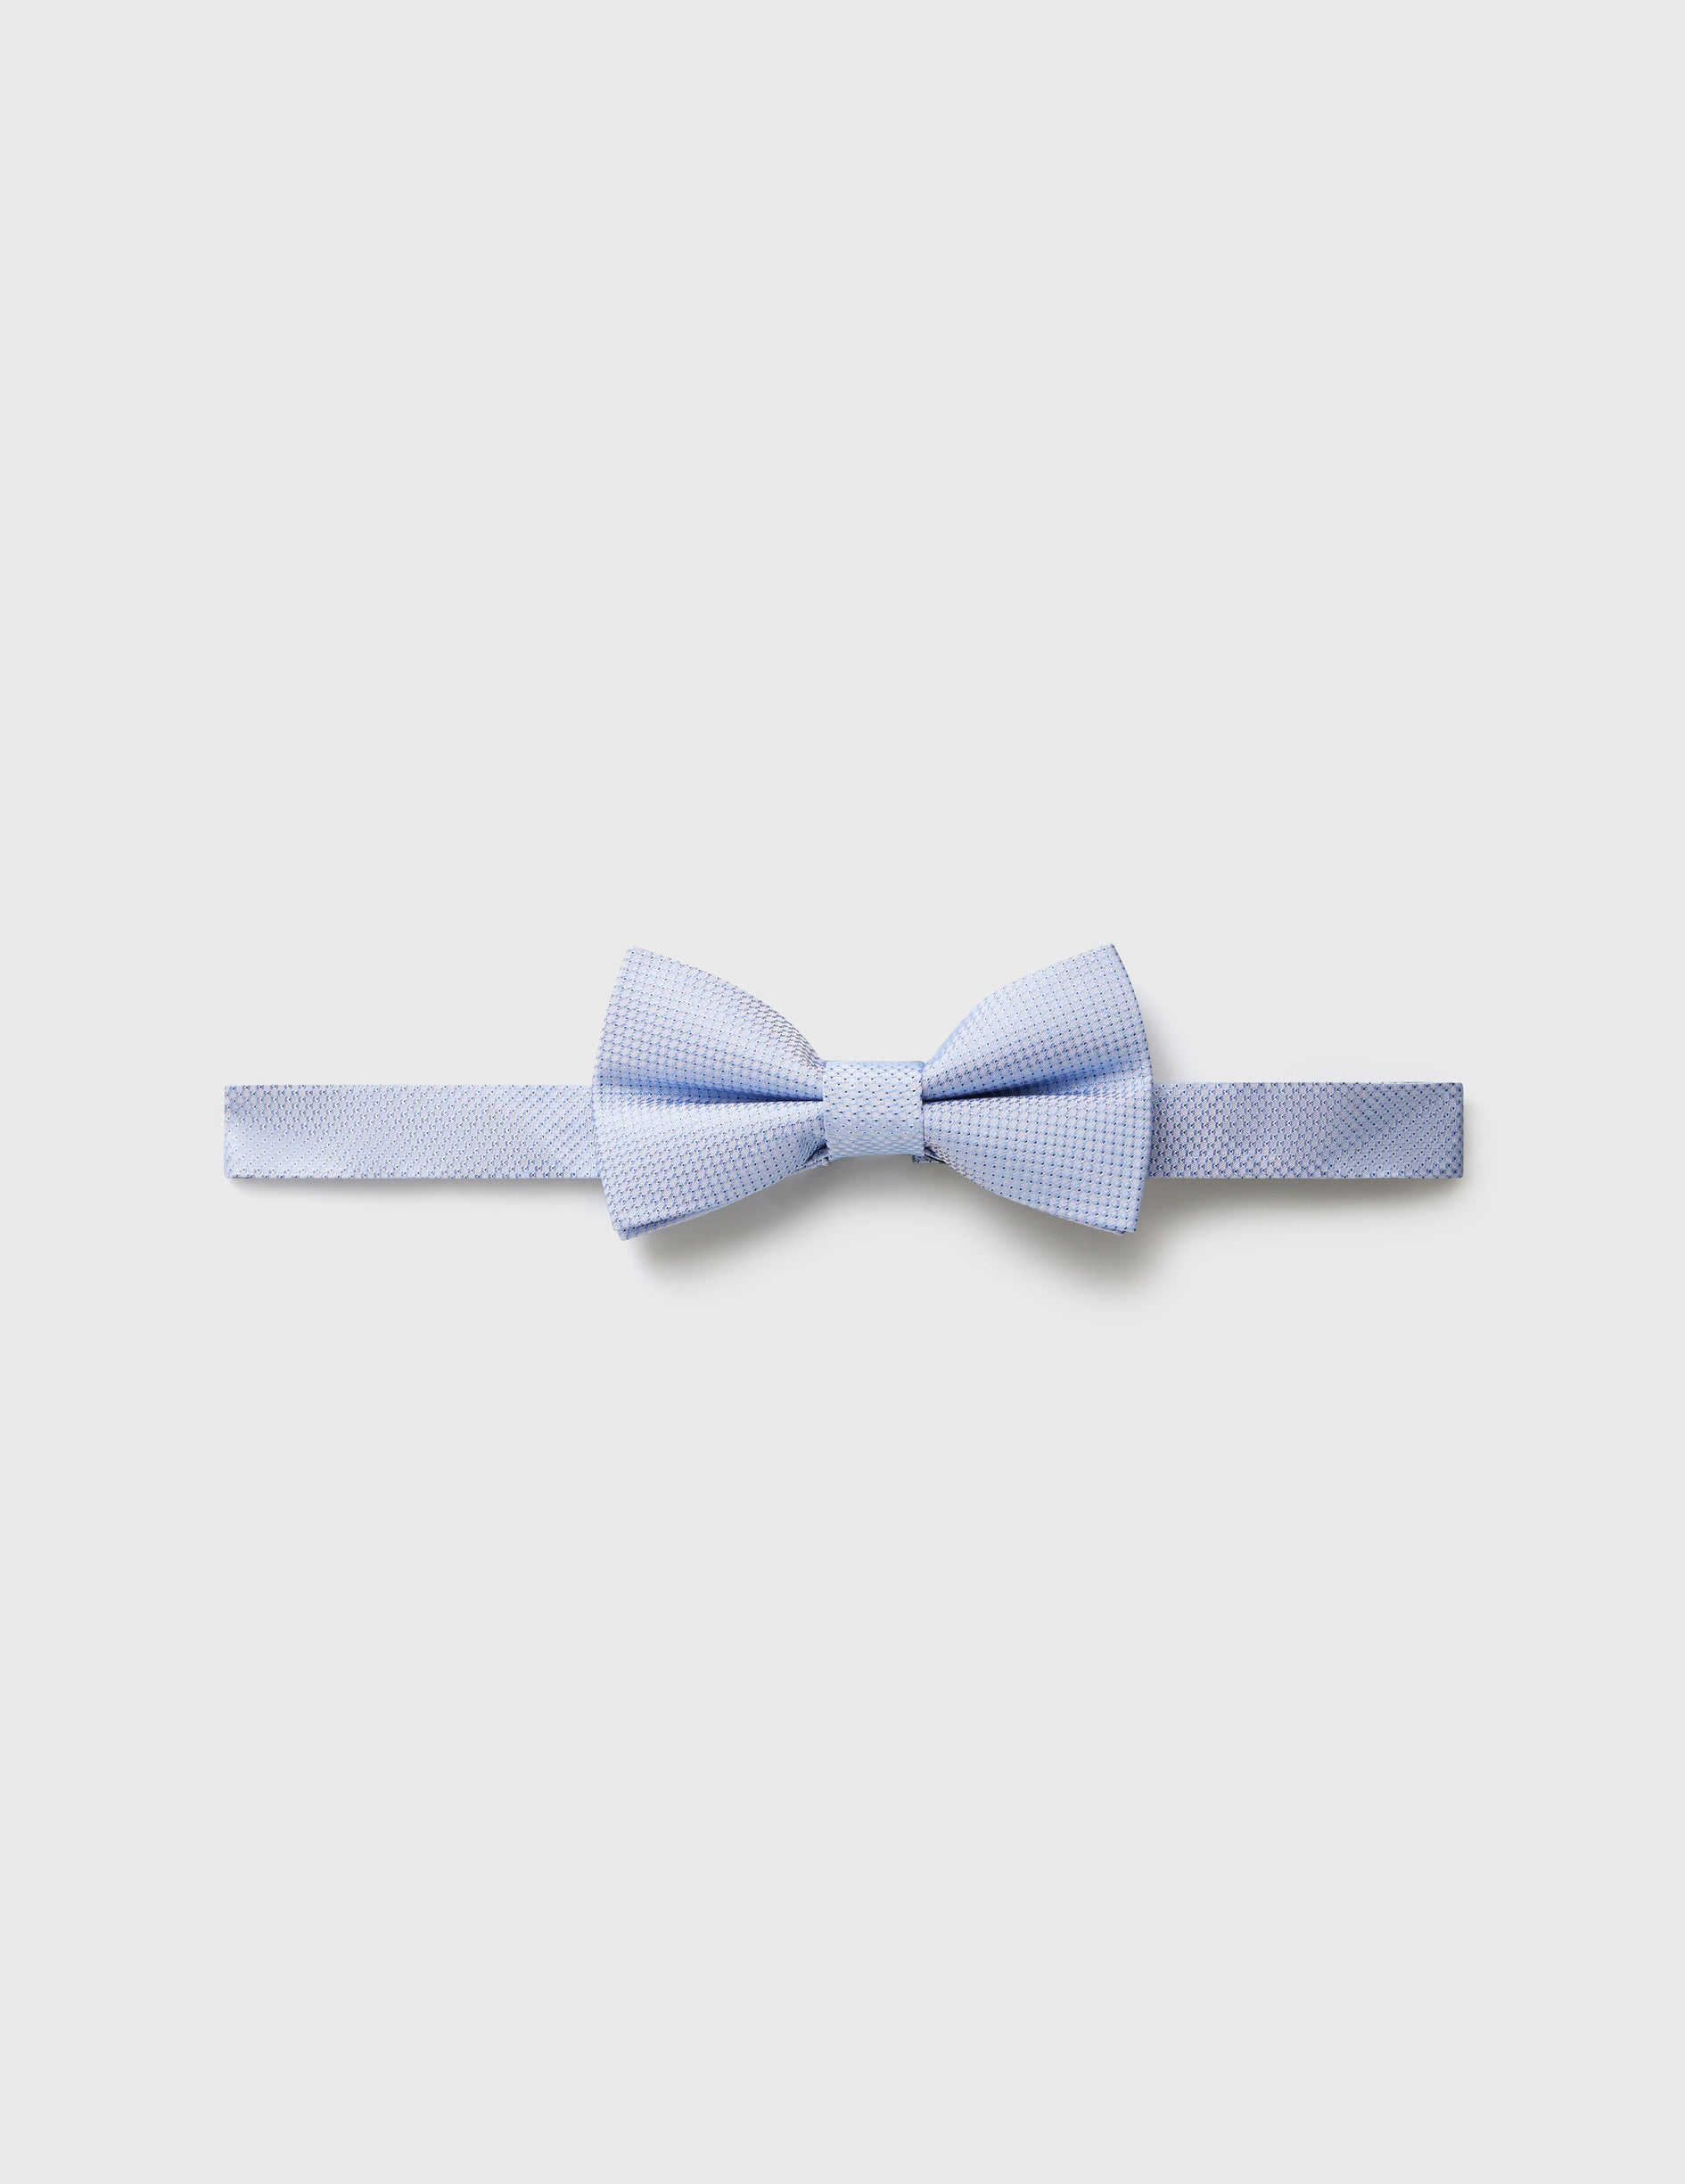 Patterned light blue silk bow tie